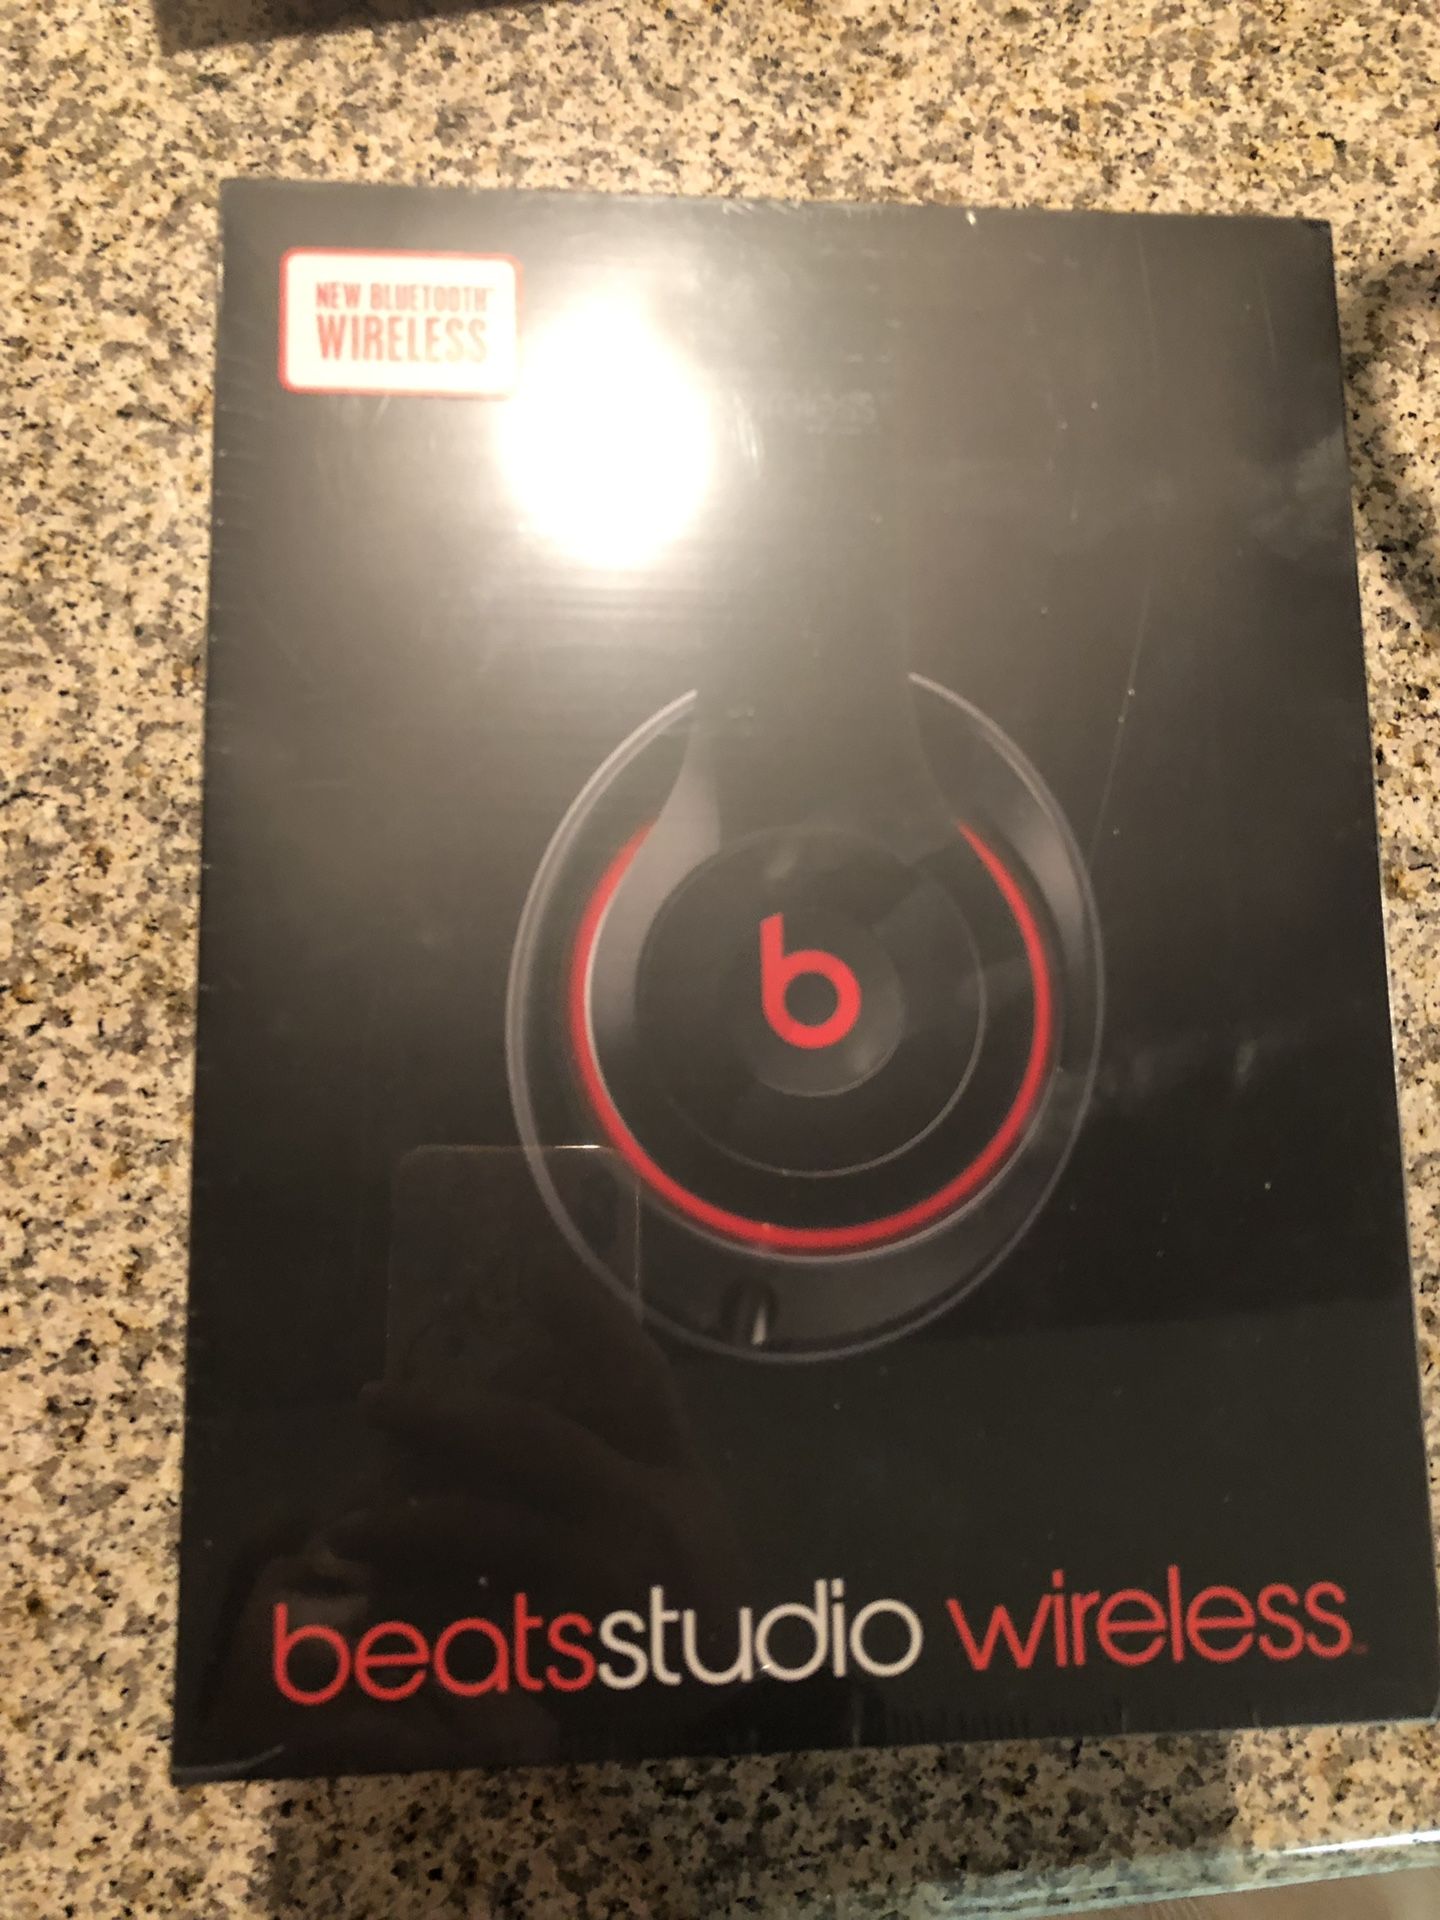 Beats studio wireless